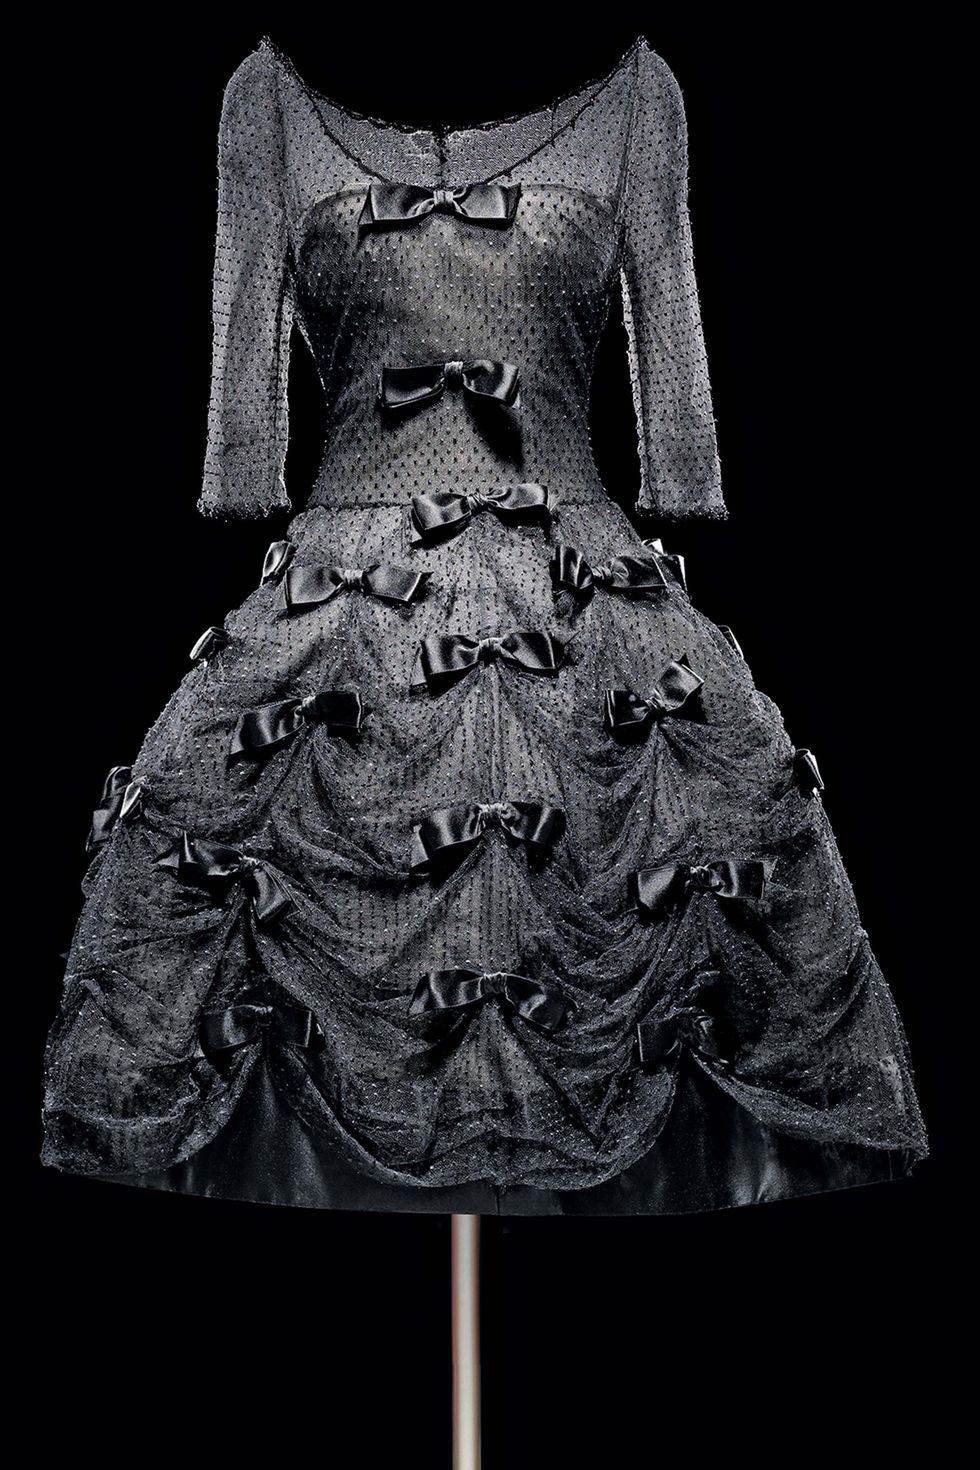 Christian Dior (1905–1957), Essay, The Metropolitan Museum of Art